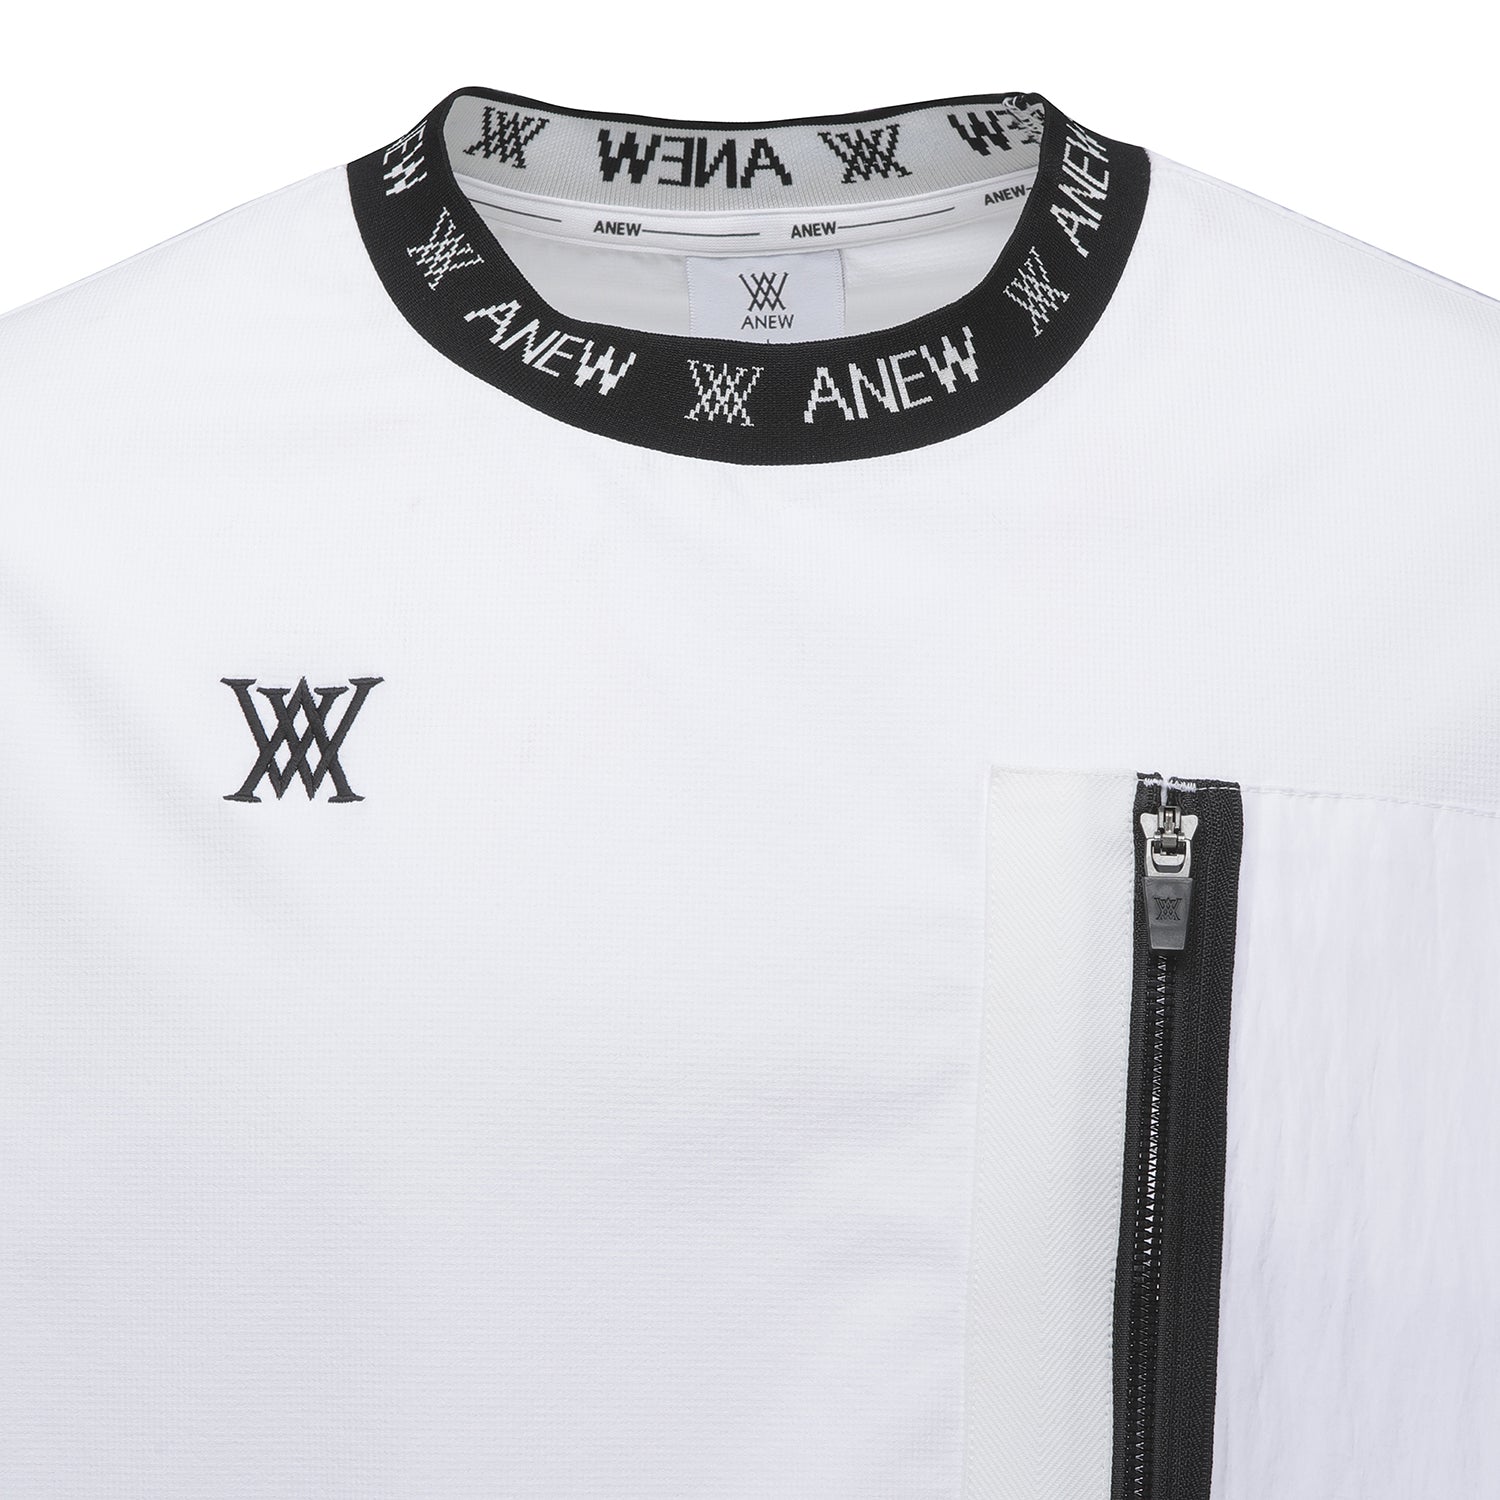 Men's Ribbed Woven Long T-Shirt - White